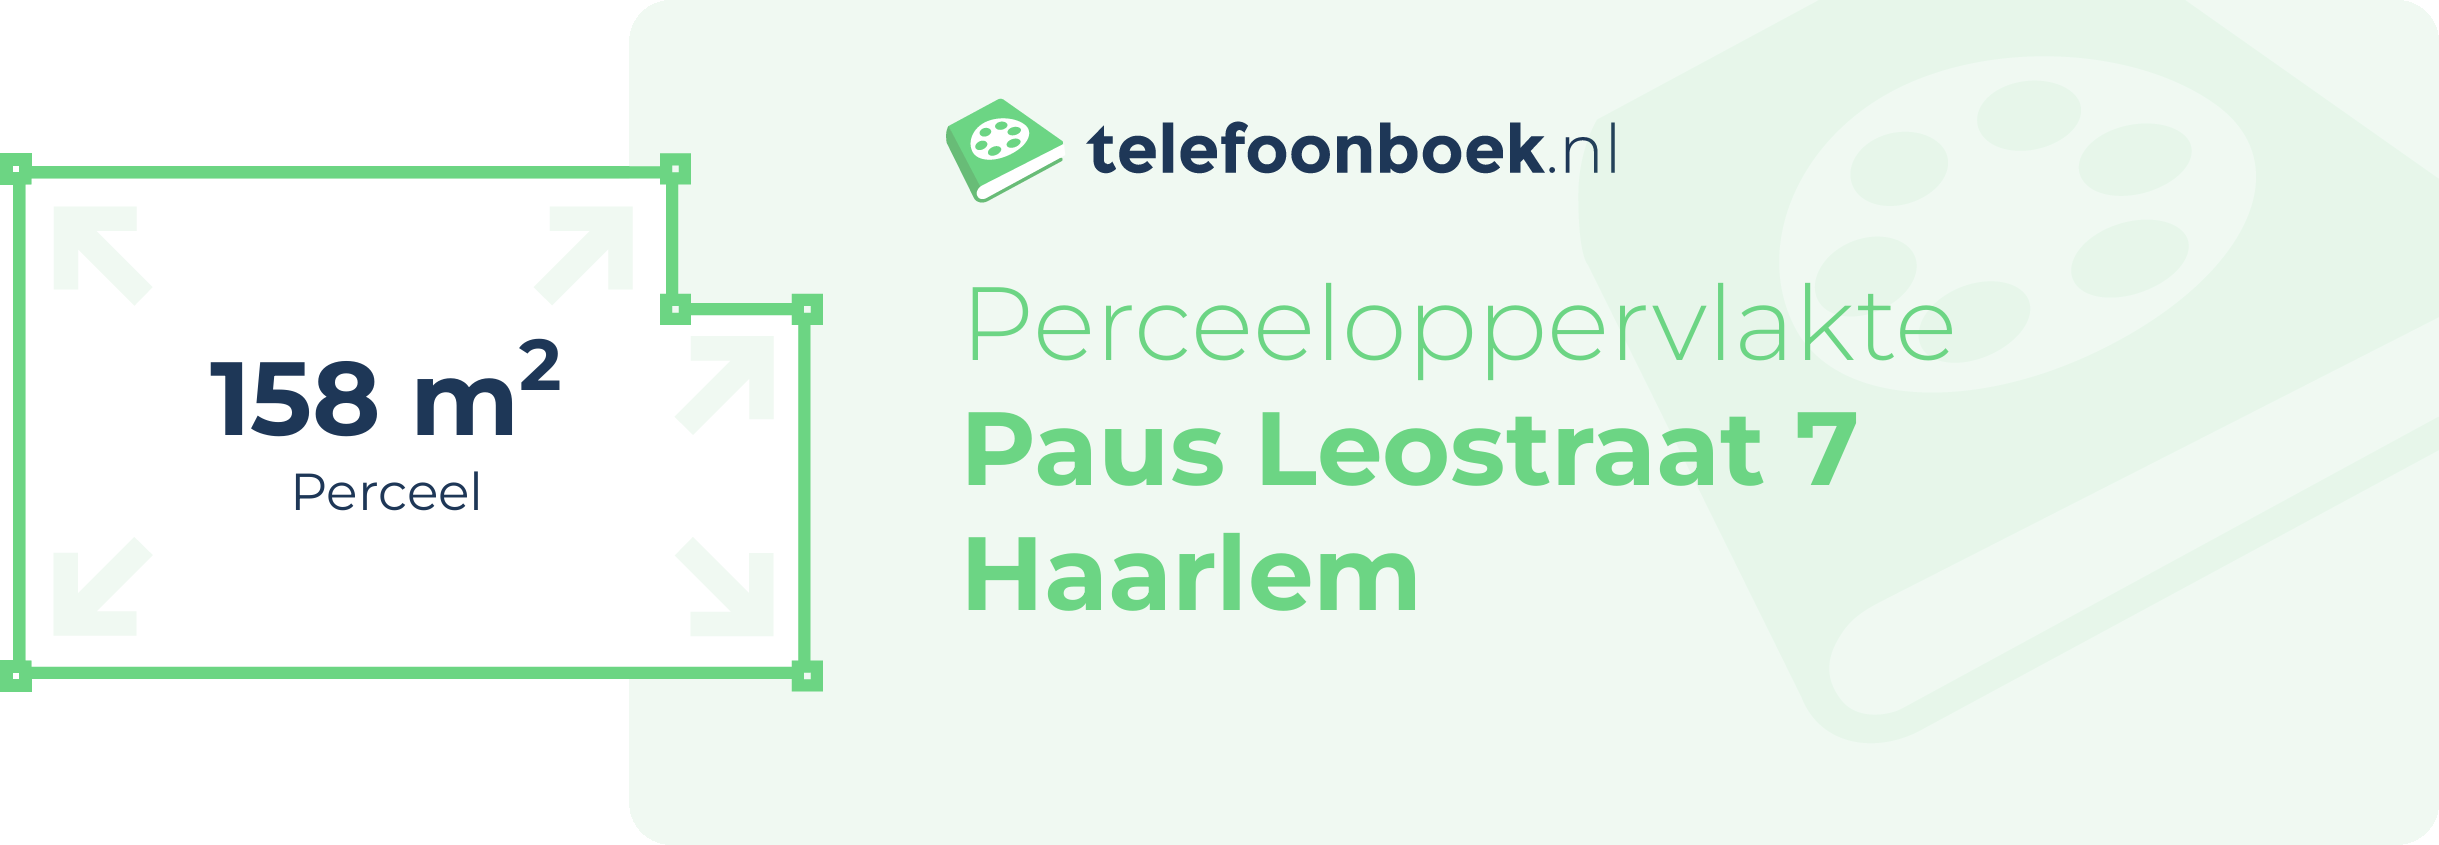 Perceeloppervlakte Paus Leostraat 7 Haarlem